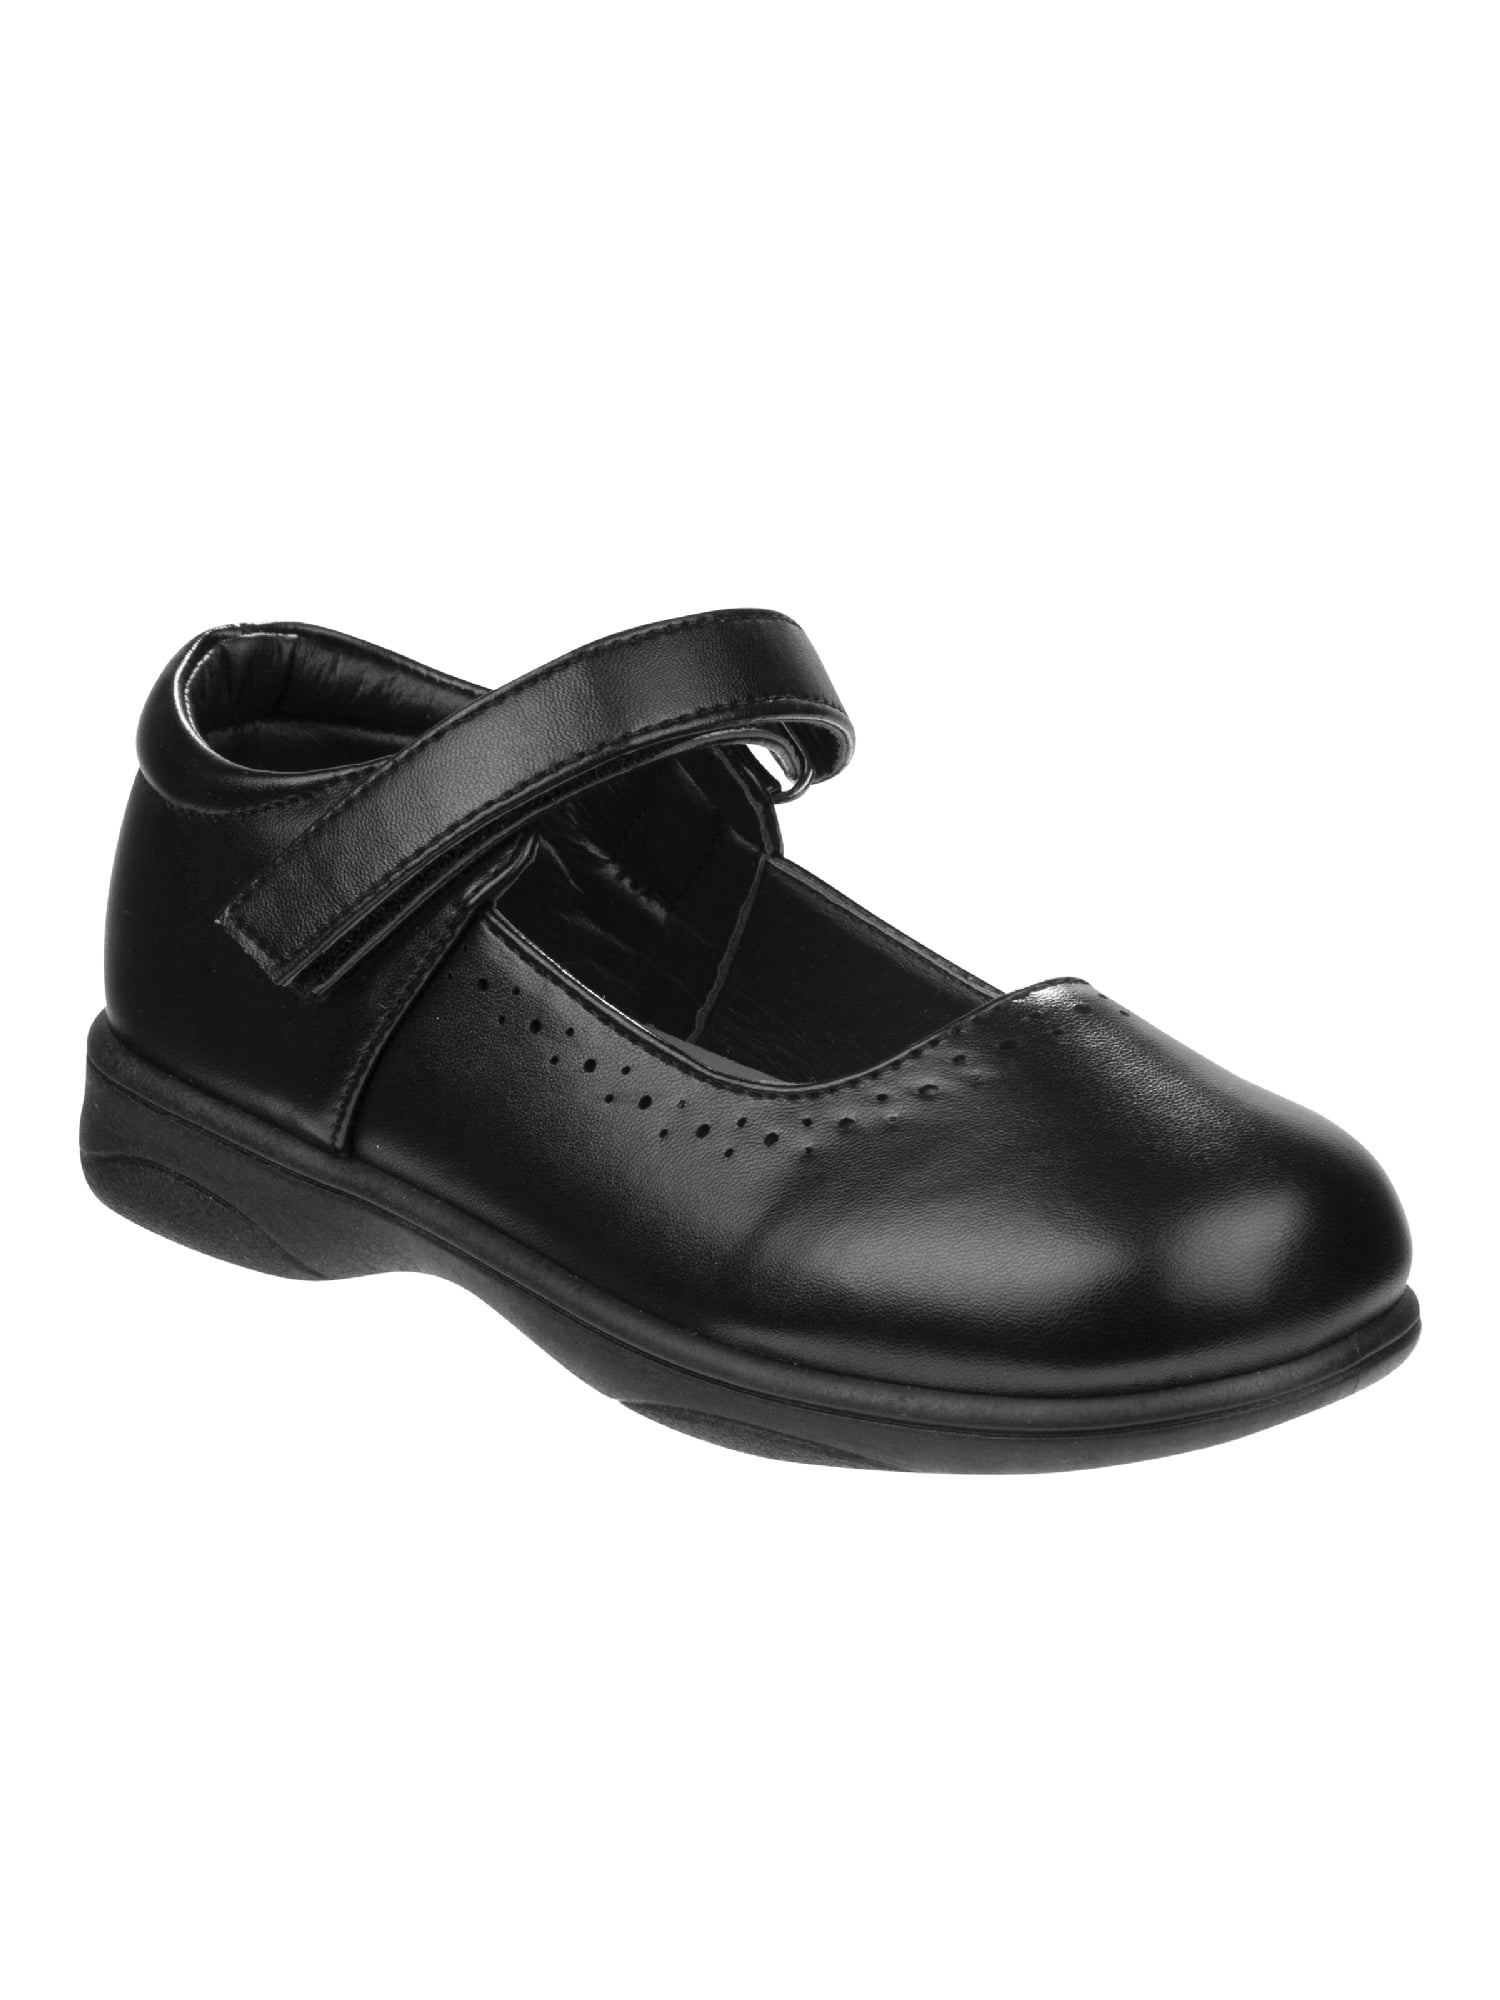 Girls School Smart Shoes strap-over black patent  CHIX 10,11,12,13,1,2 NEW 